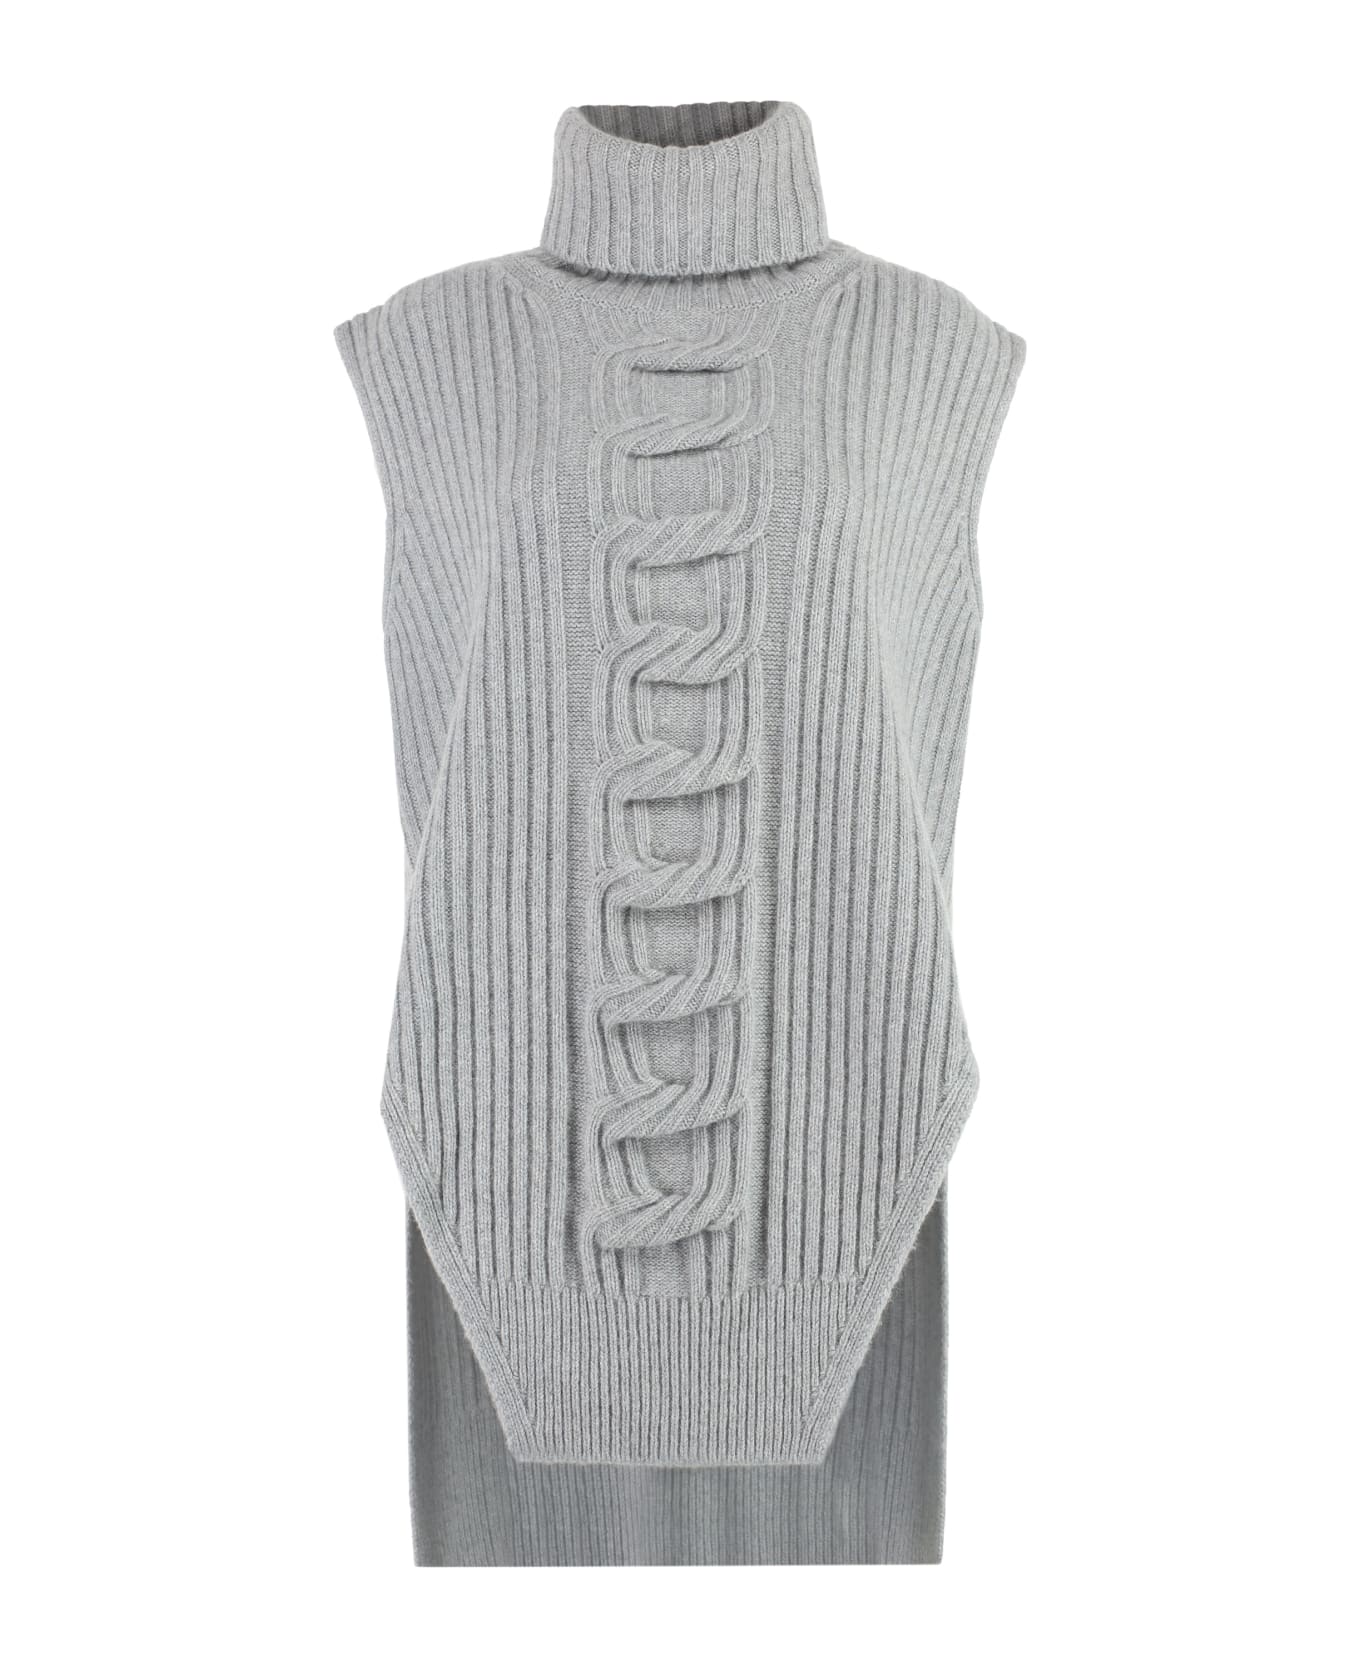 Stella McCartney Cable Knit Sleeveless Sweater - grey